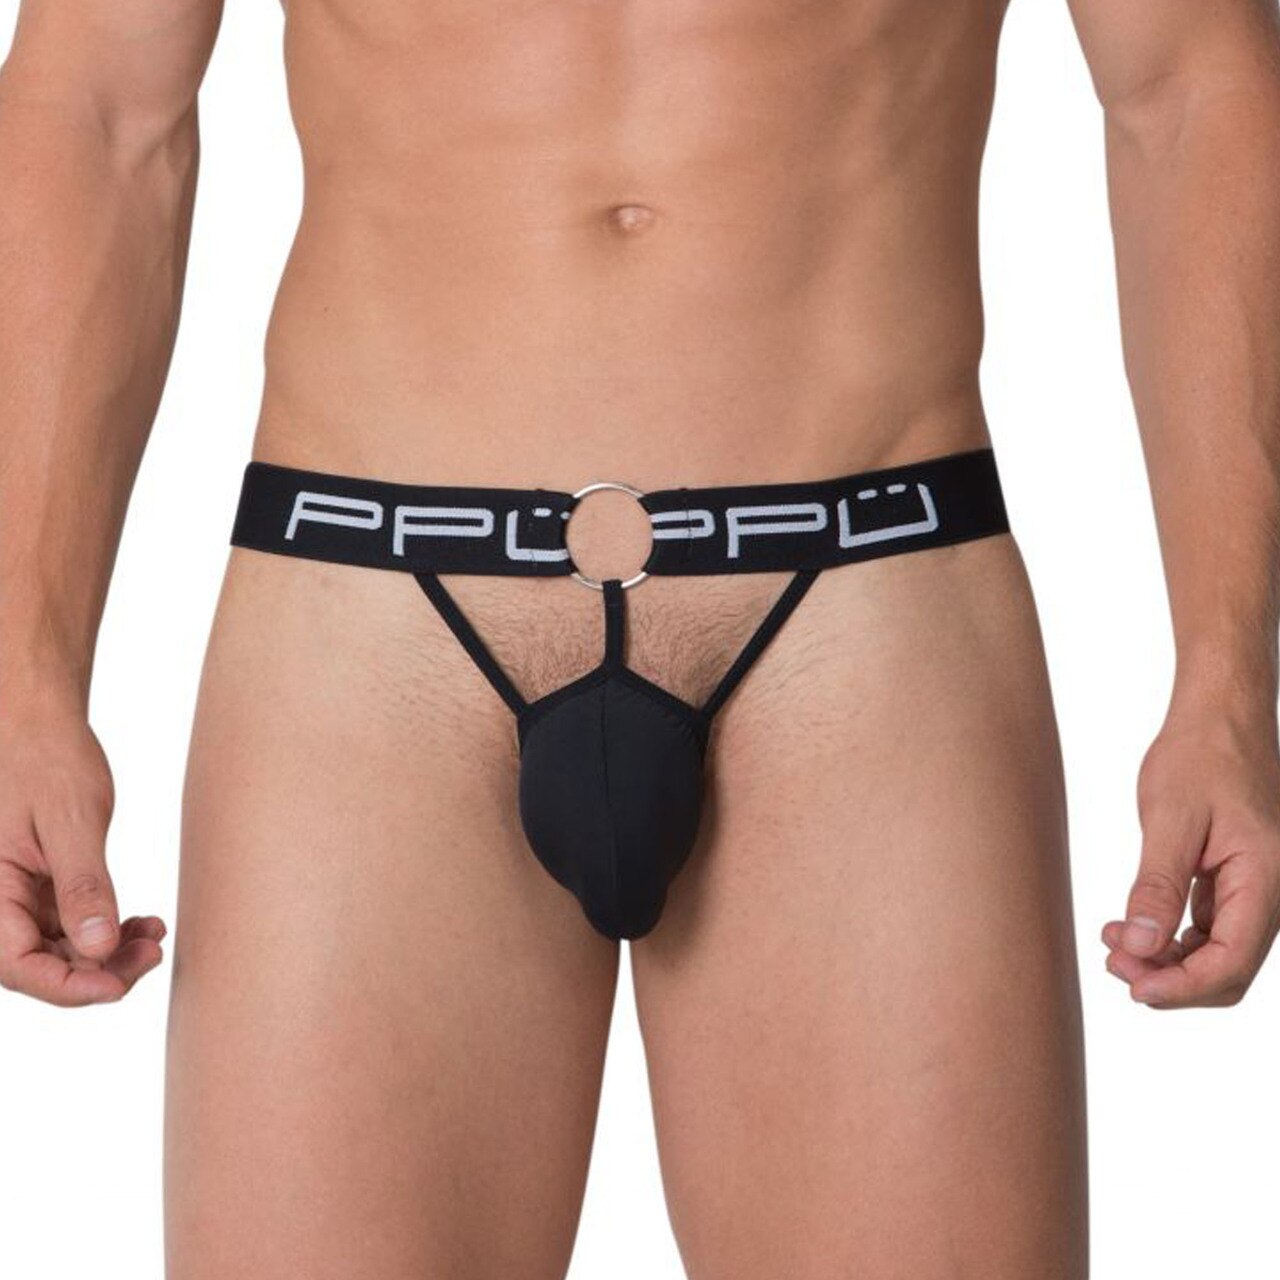 SALE - Mens PPU Underwear Ring Jock Strap Black